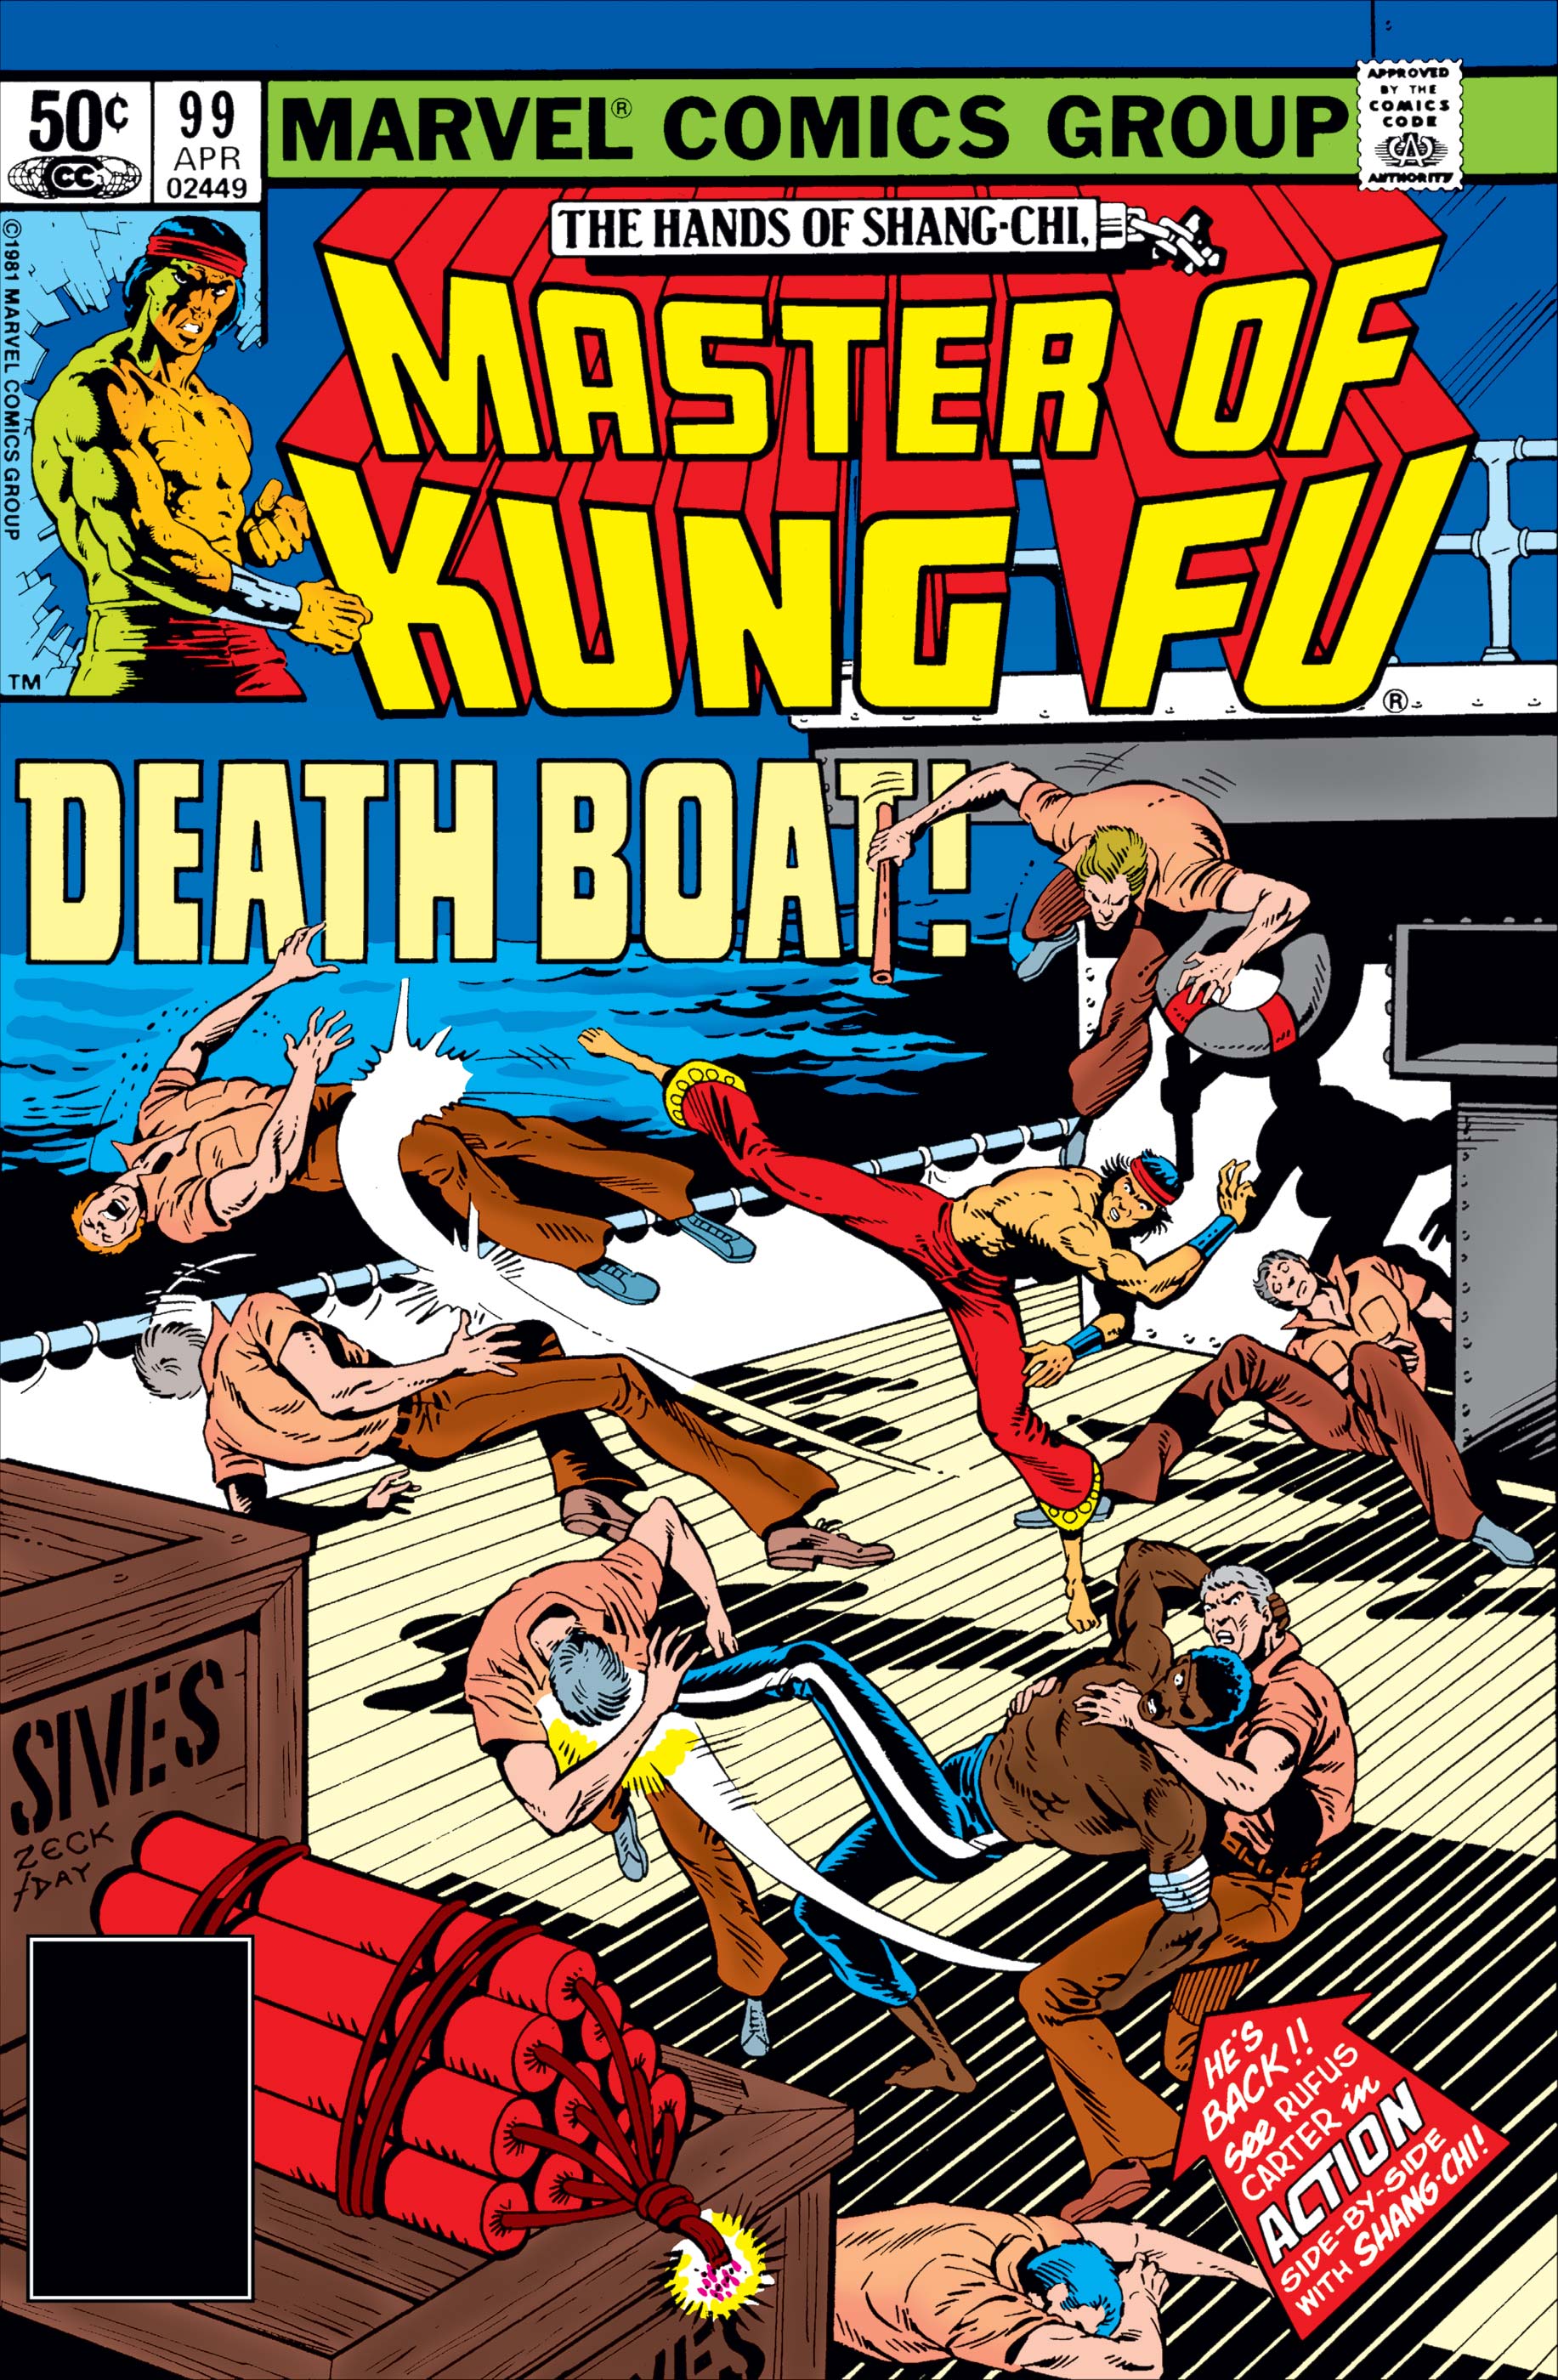 Master of Kung Fu (1974) #99